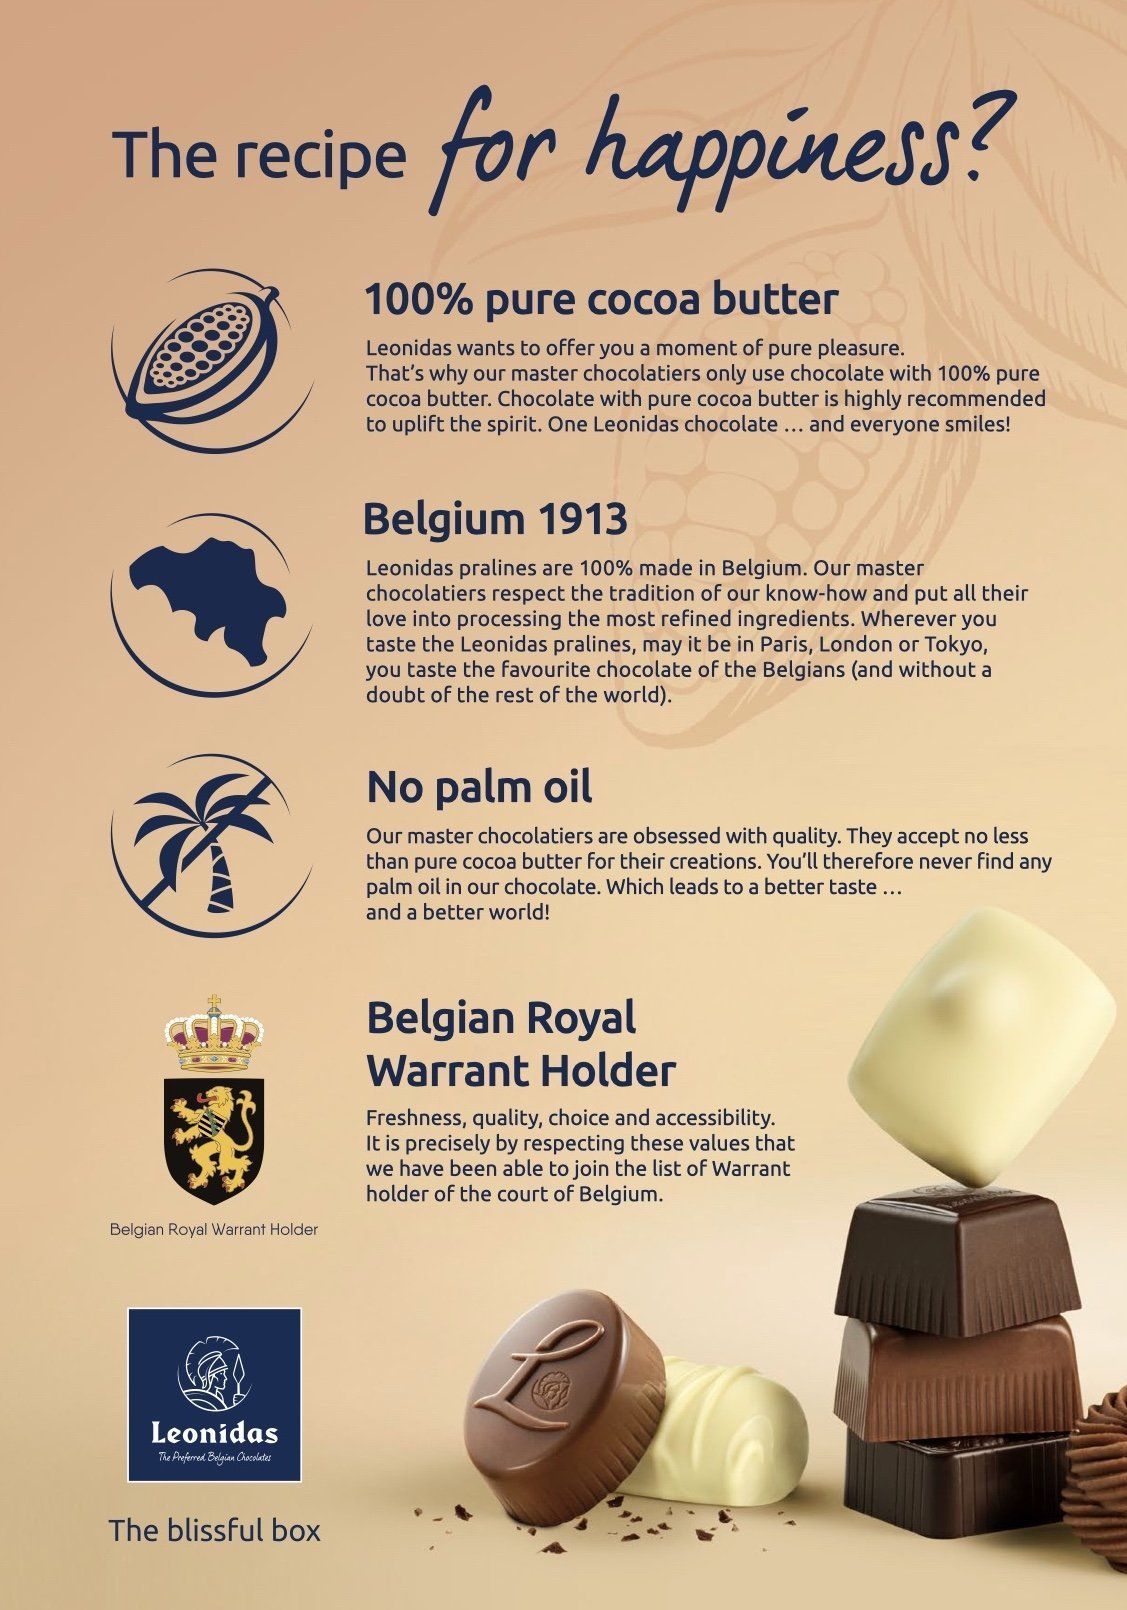 Leonidas ALCOHOL FREE -  Luxury Classic Assorted truffles, pralines, ganache & creams, Belgian Chocolate Ballotin Box Gift Wrapped & Ribboned freeshipping - Leonidas Kensington